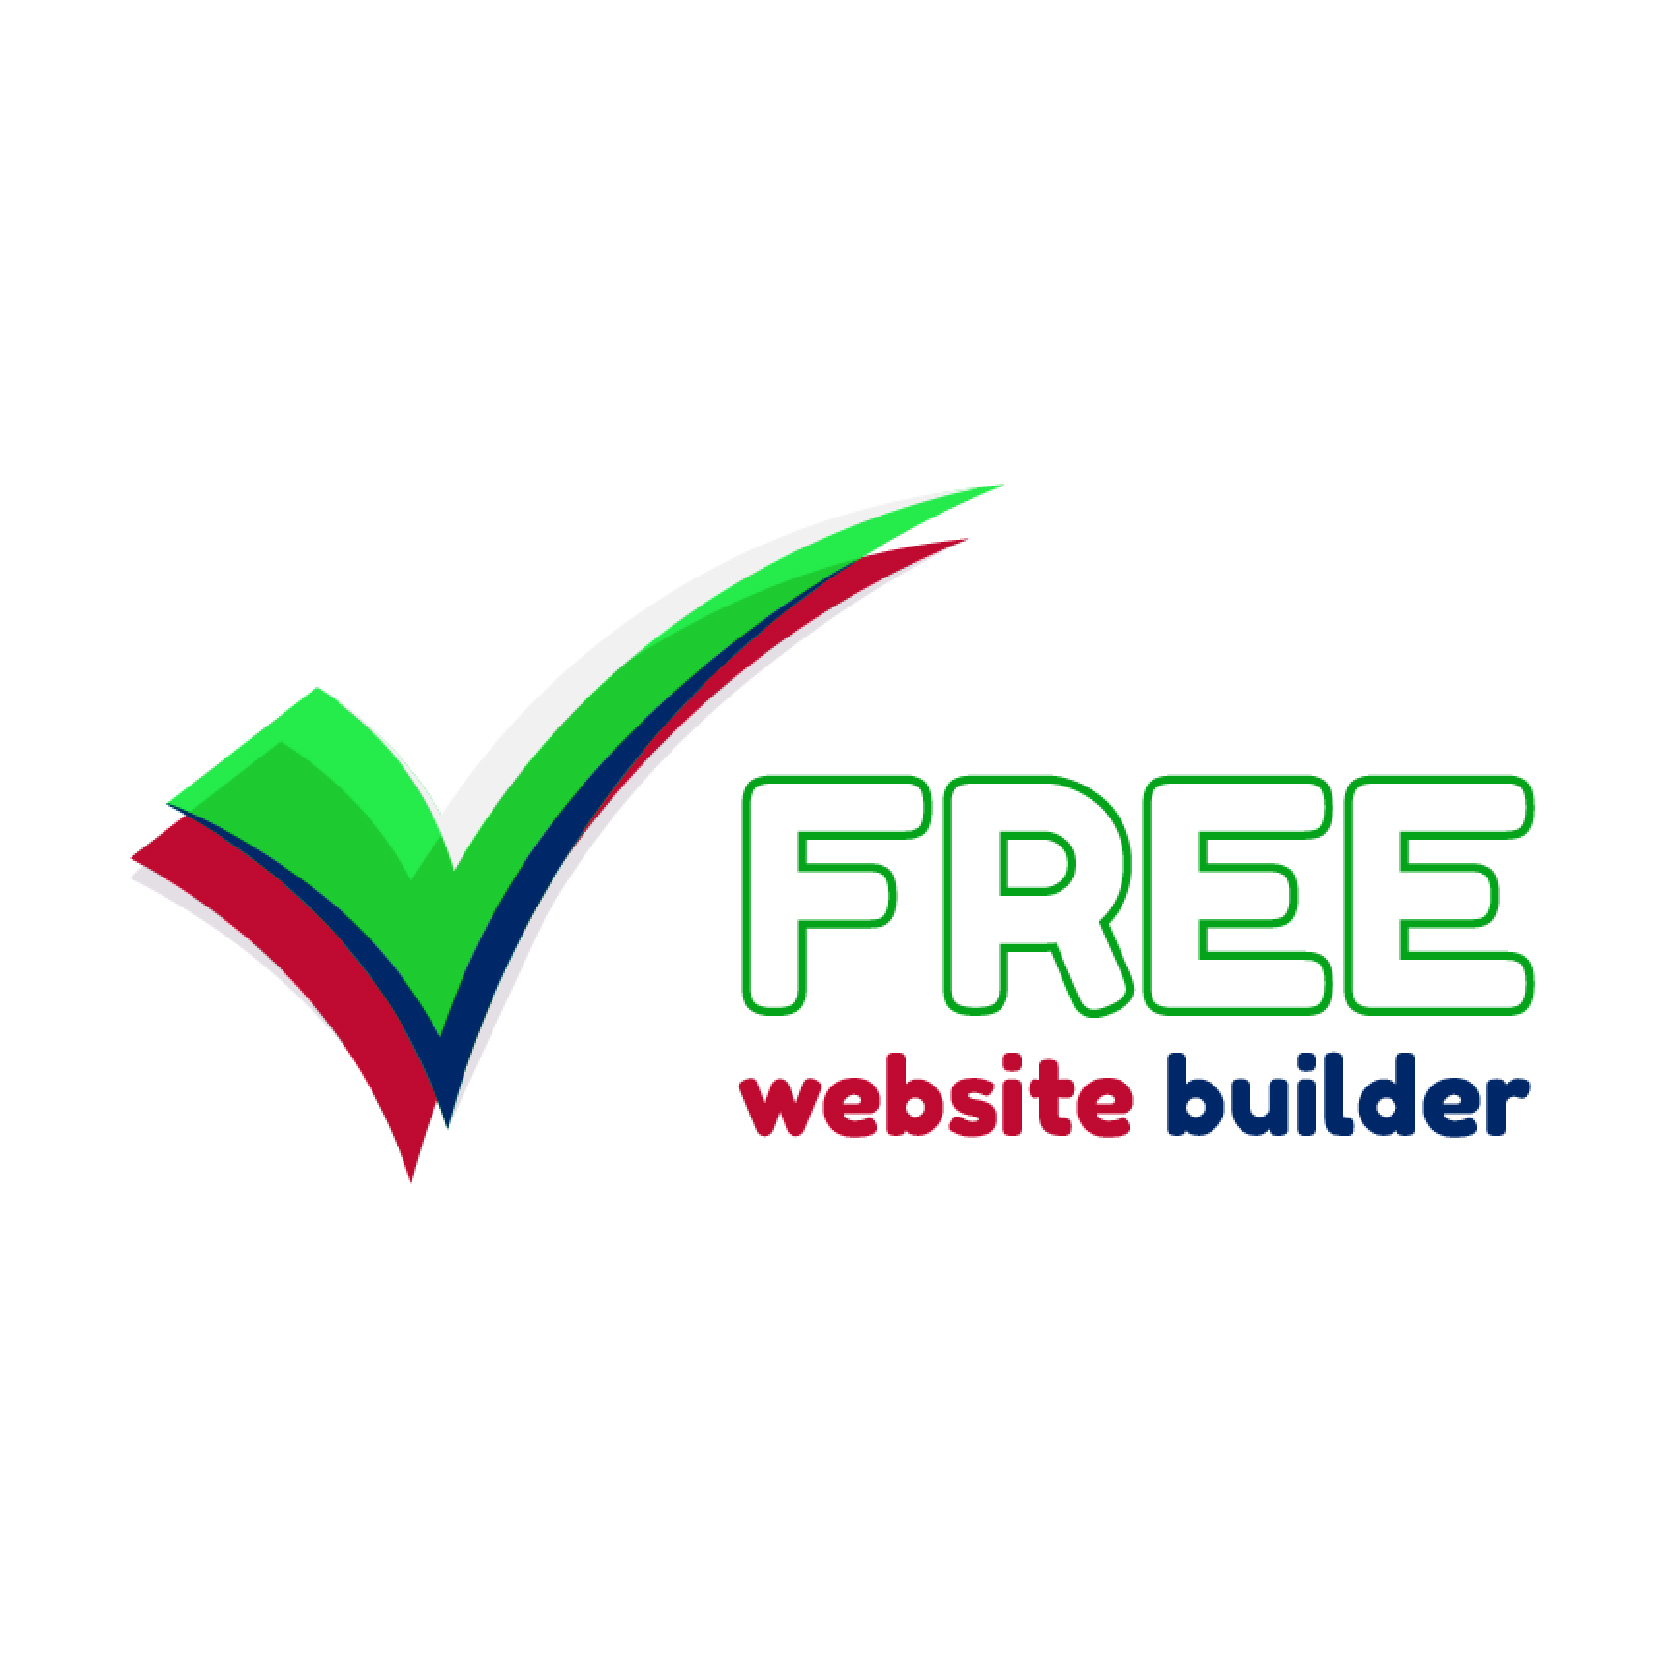 Free Website Builder